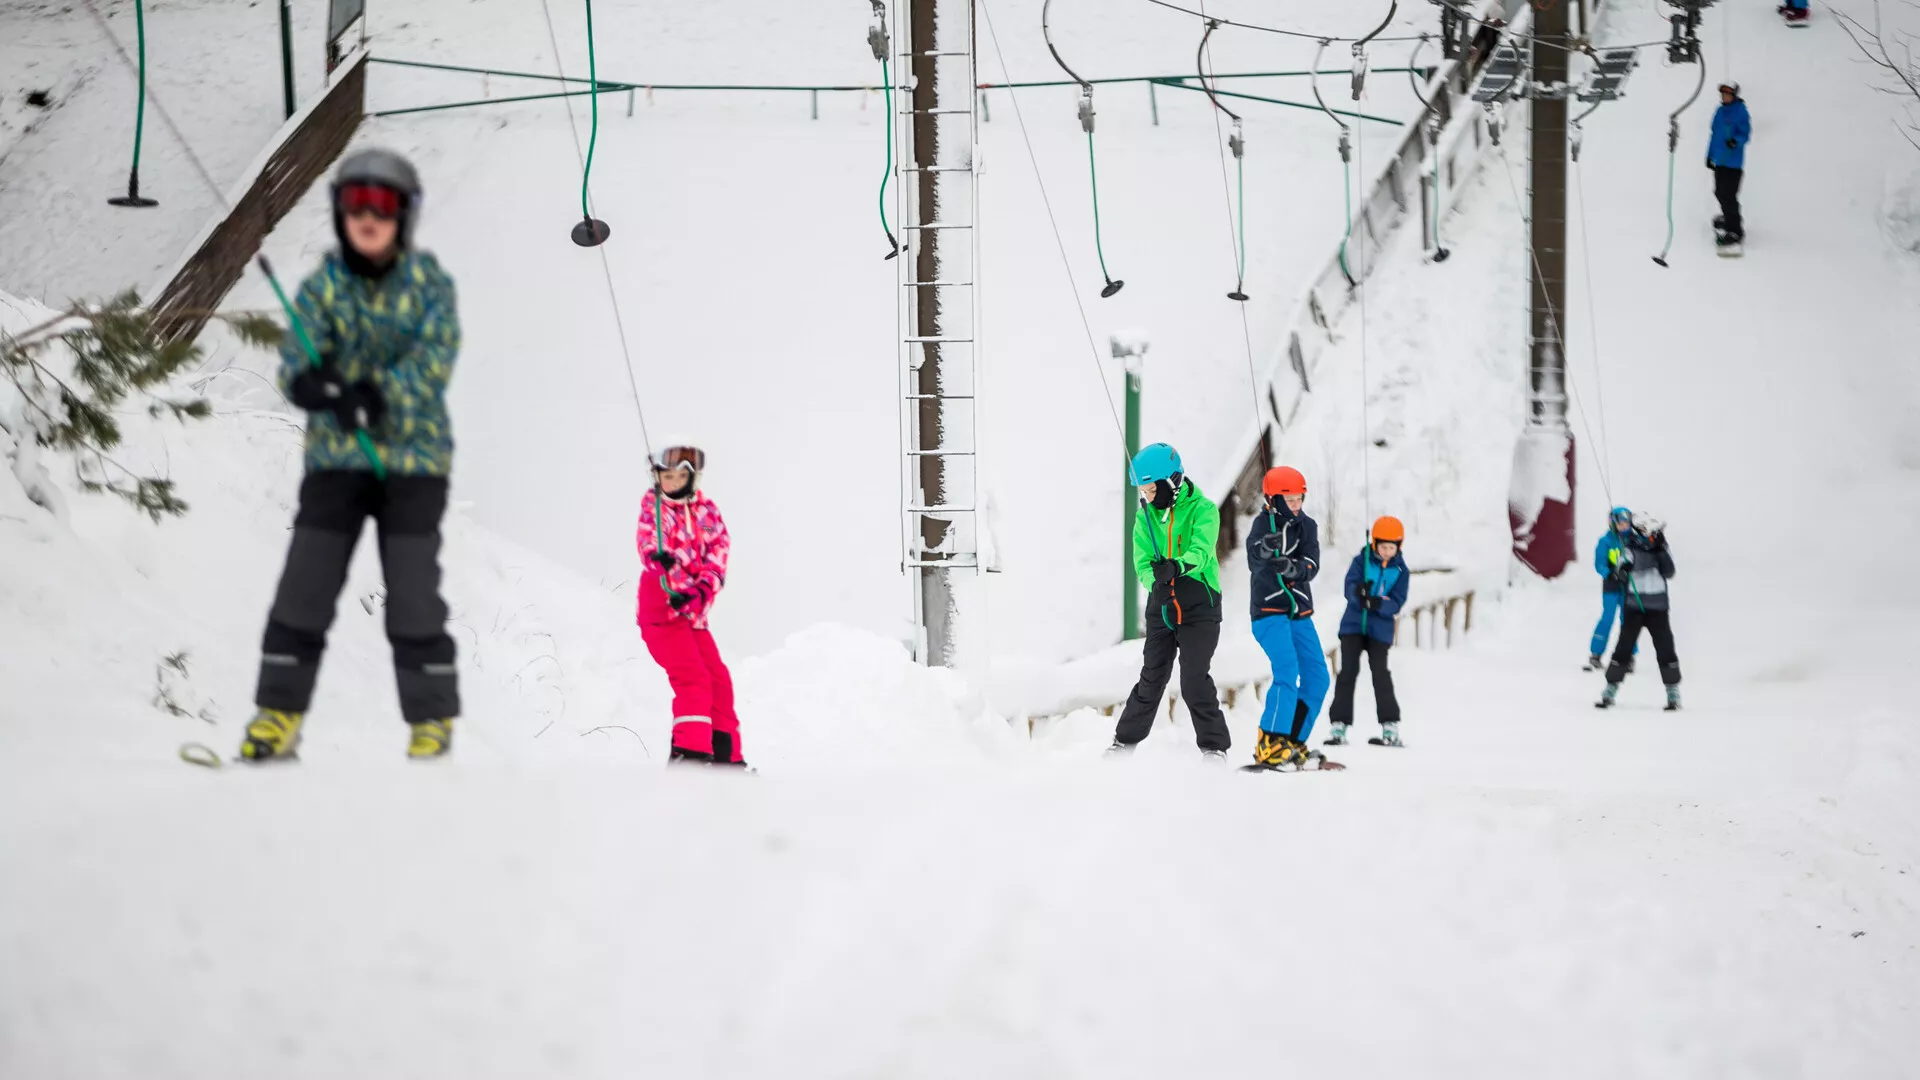 Nomme Lumepark in Estonia, Europe | Snowboarding,Skiing - Rated 3.6